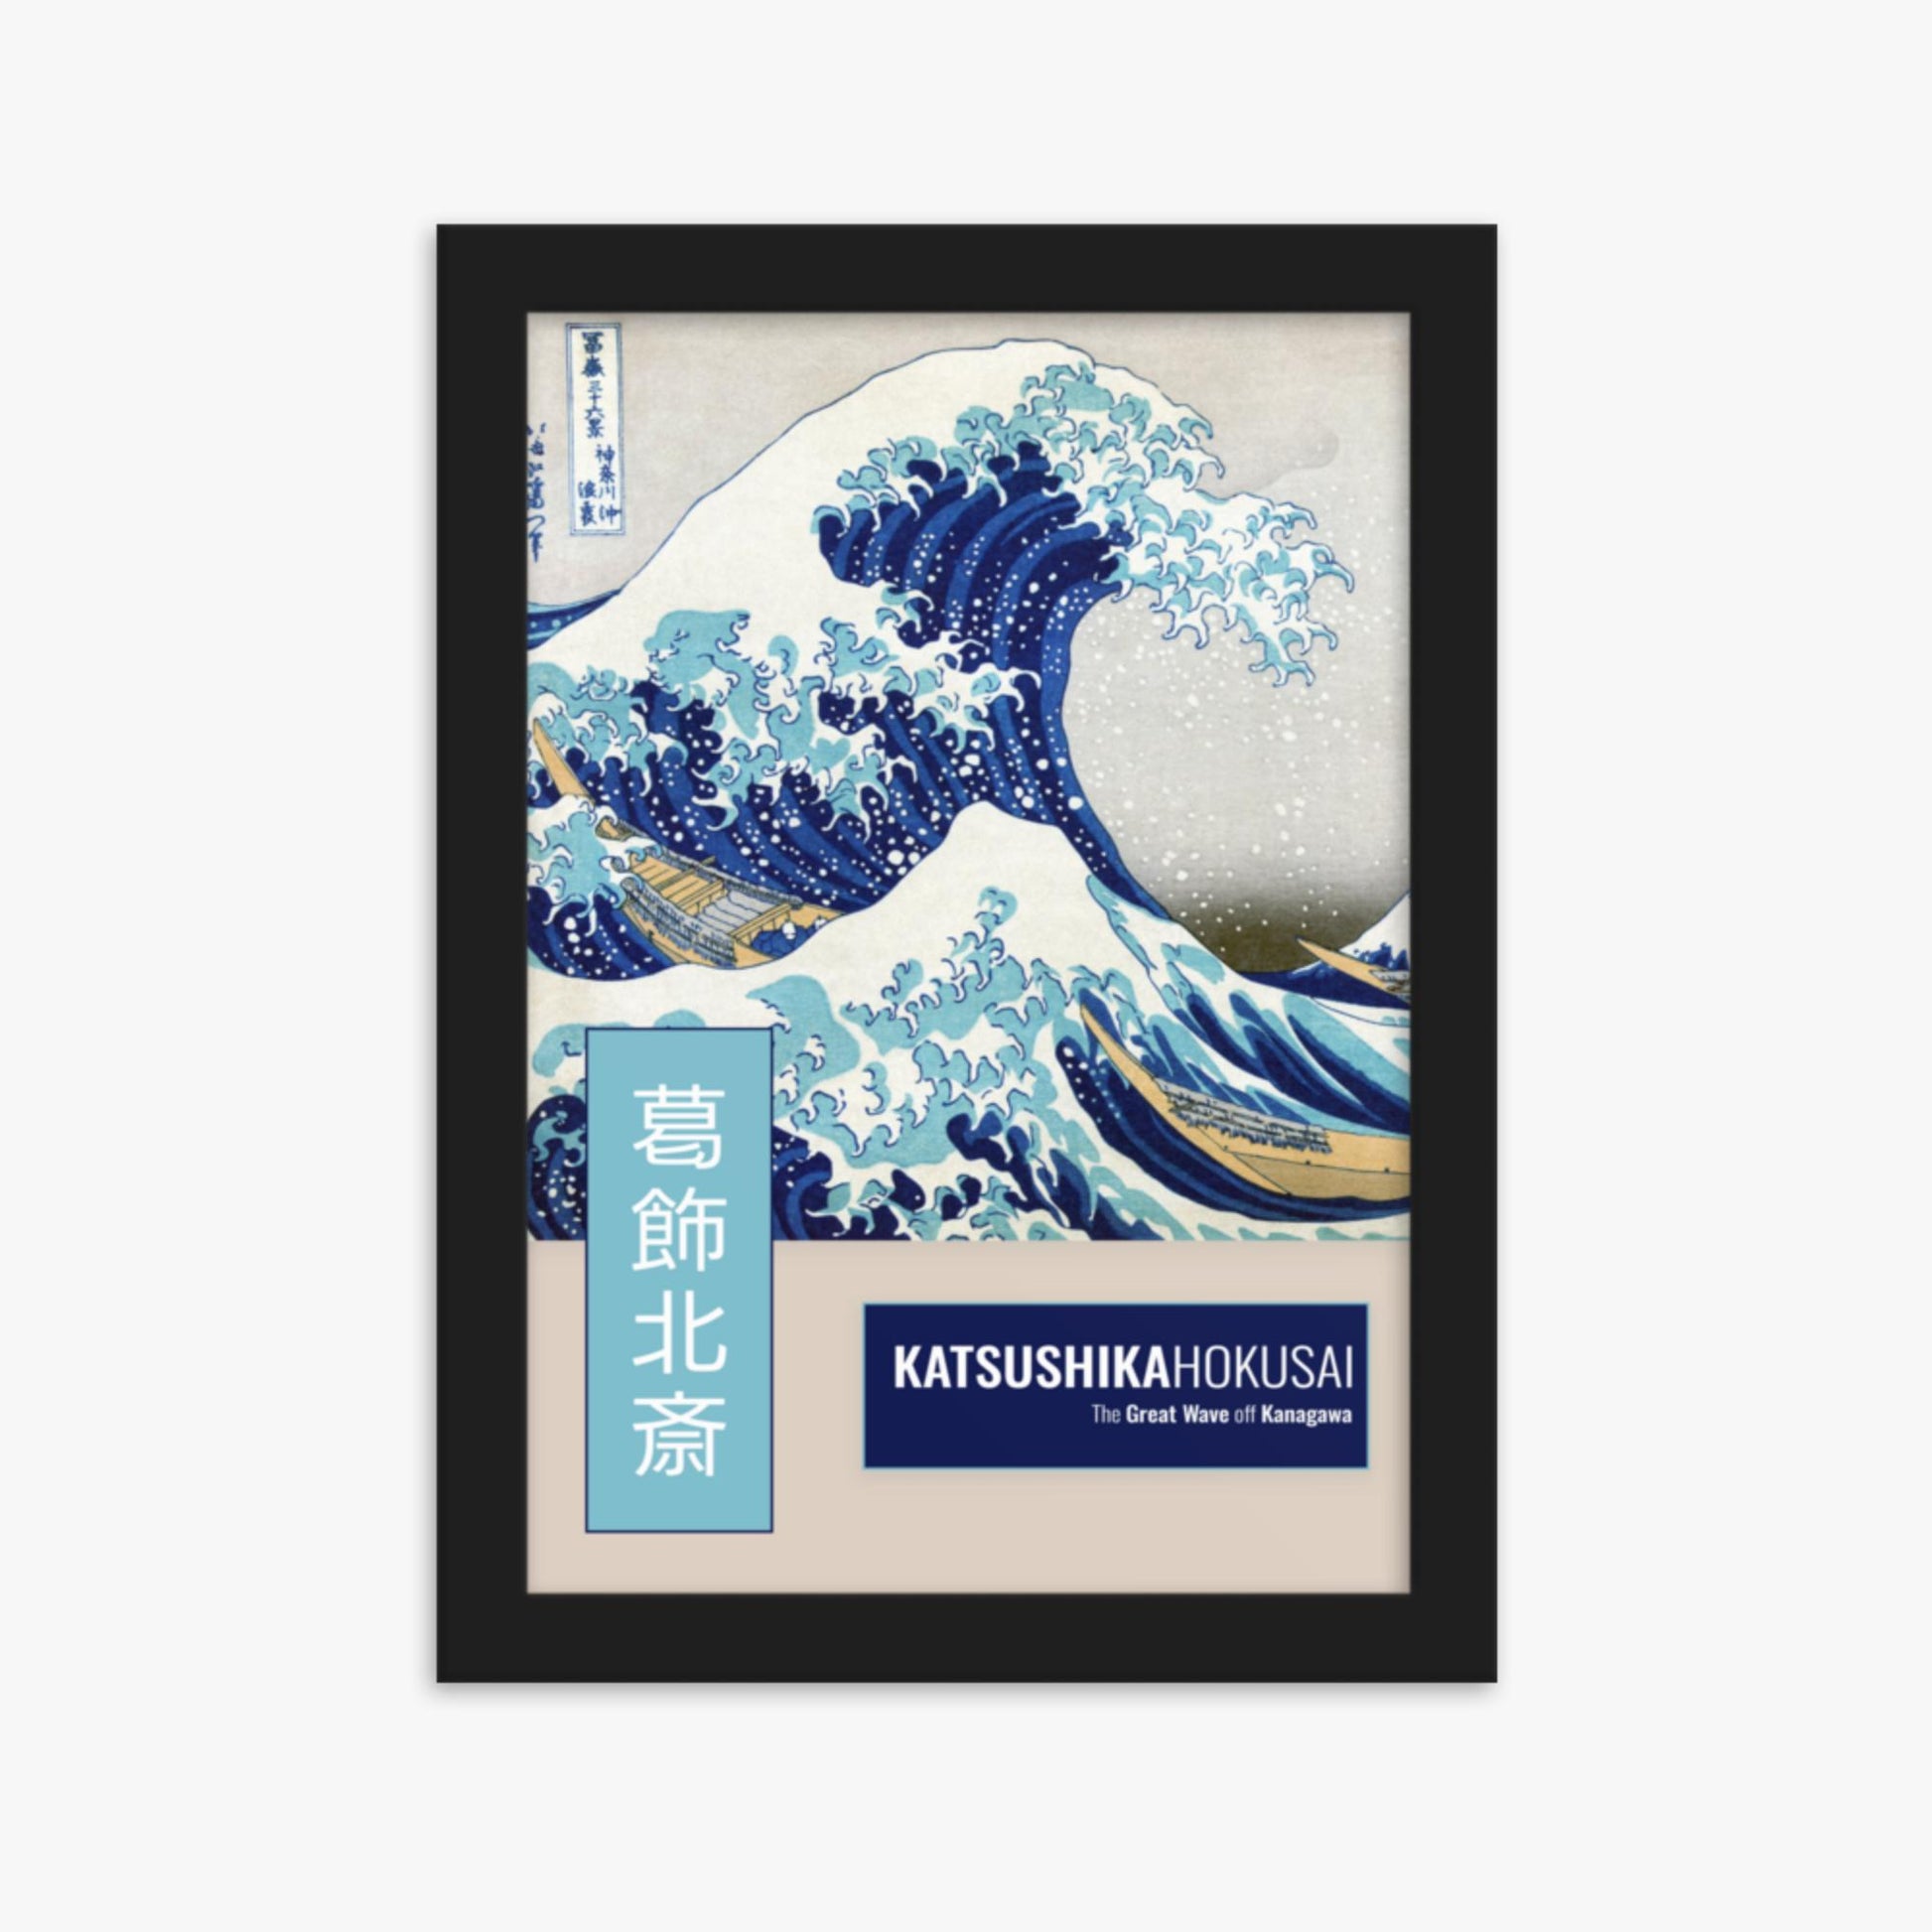 Katsushika Hokusai - The Great Wave off Kanagawa - Decoration 21x30 cm Poster With Black Frame